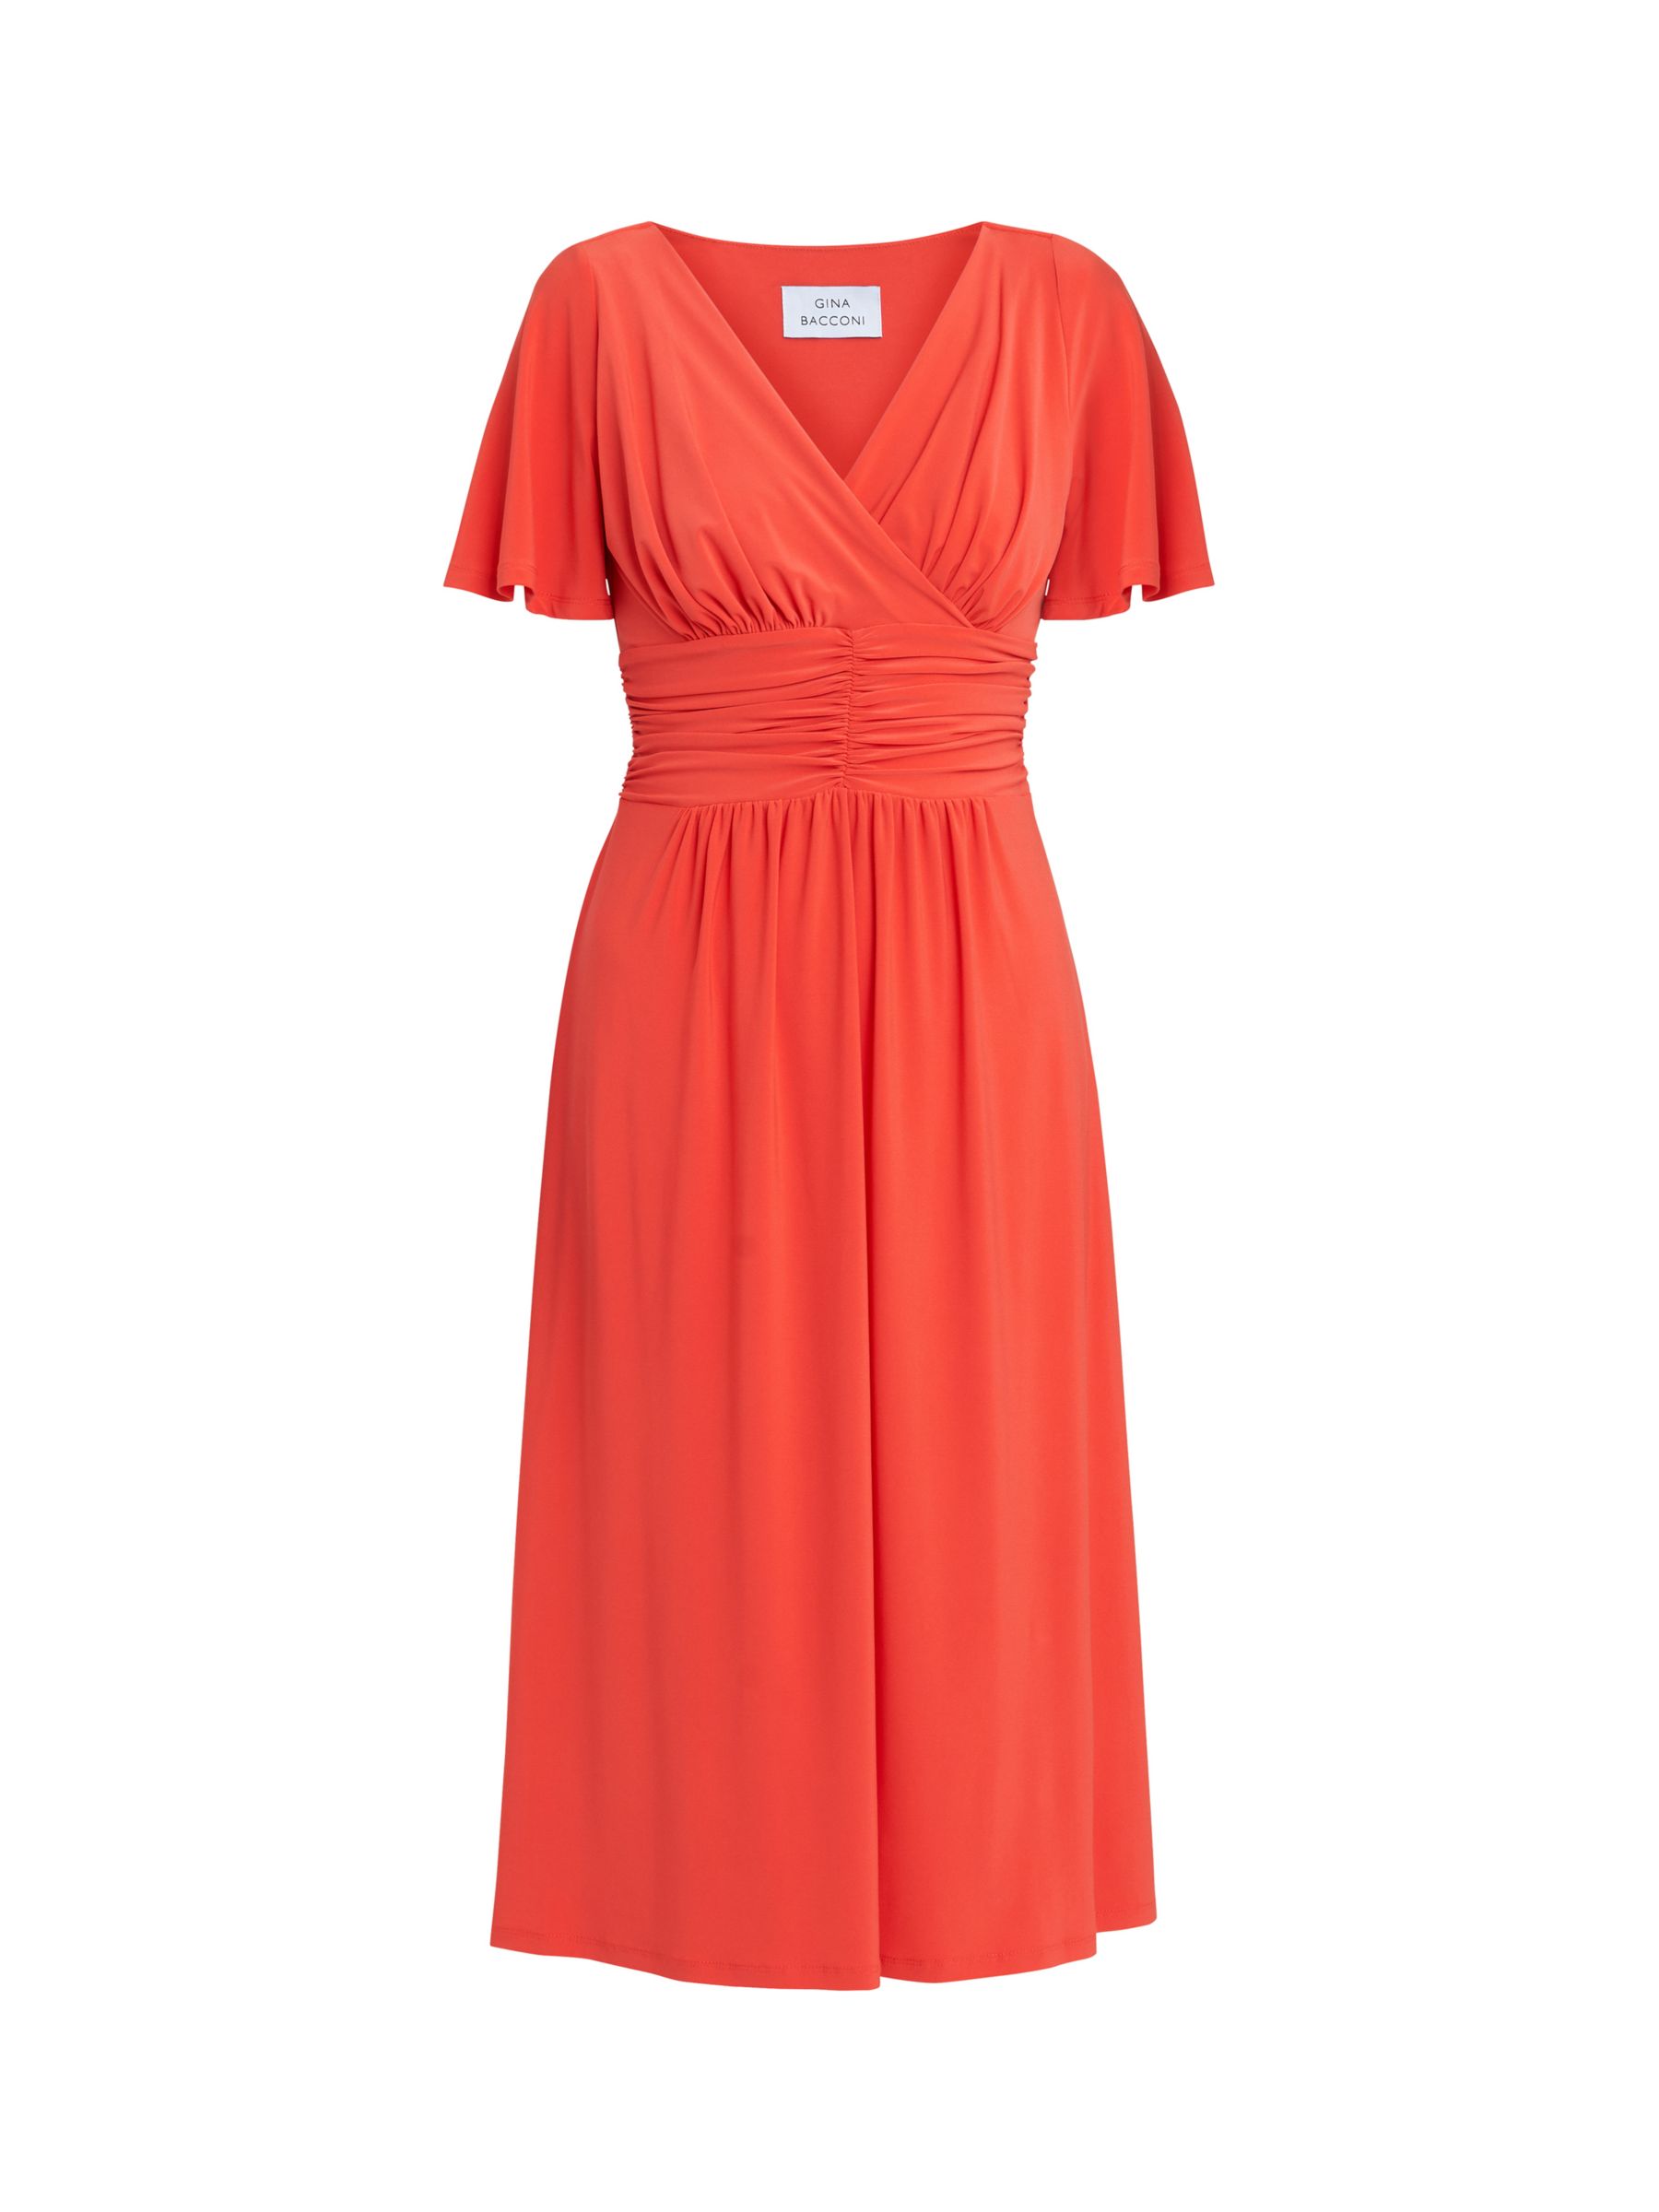 Gina Bacconi Frieda Midi Jersey Dress, Orange, 8